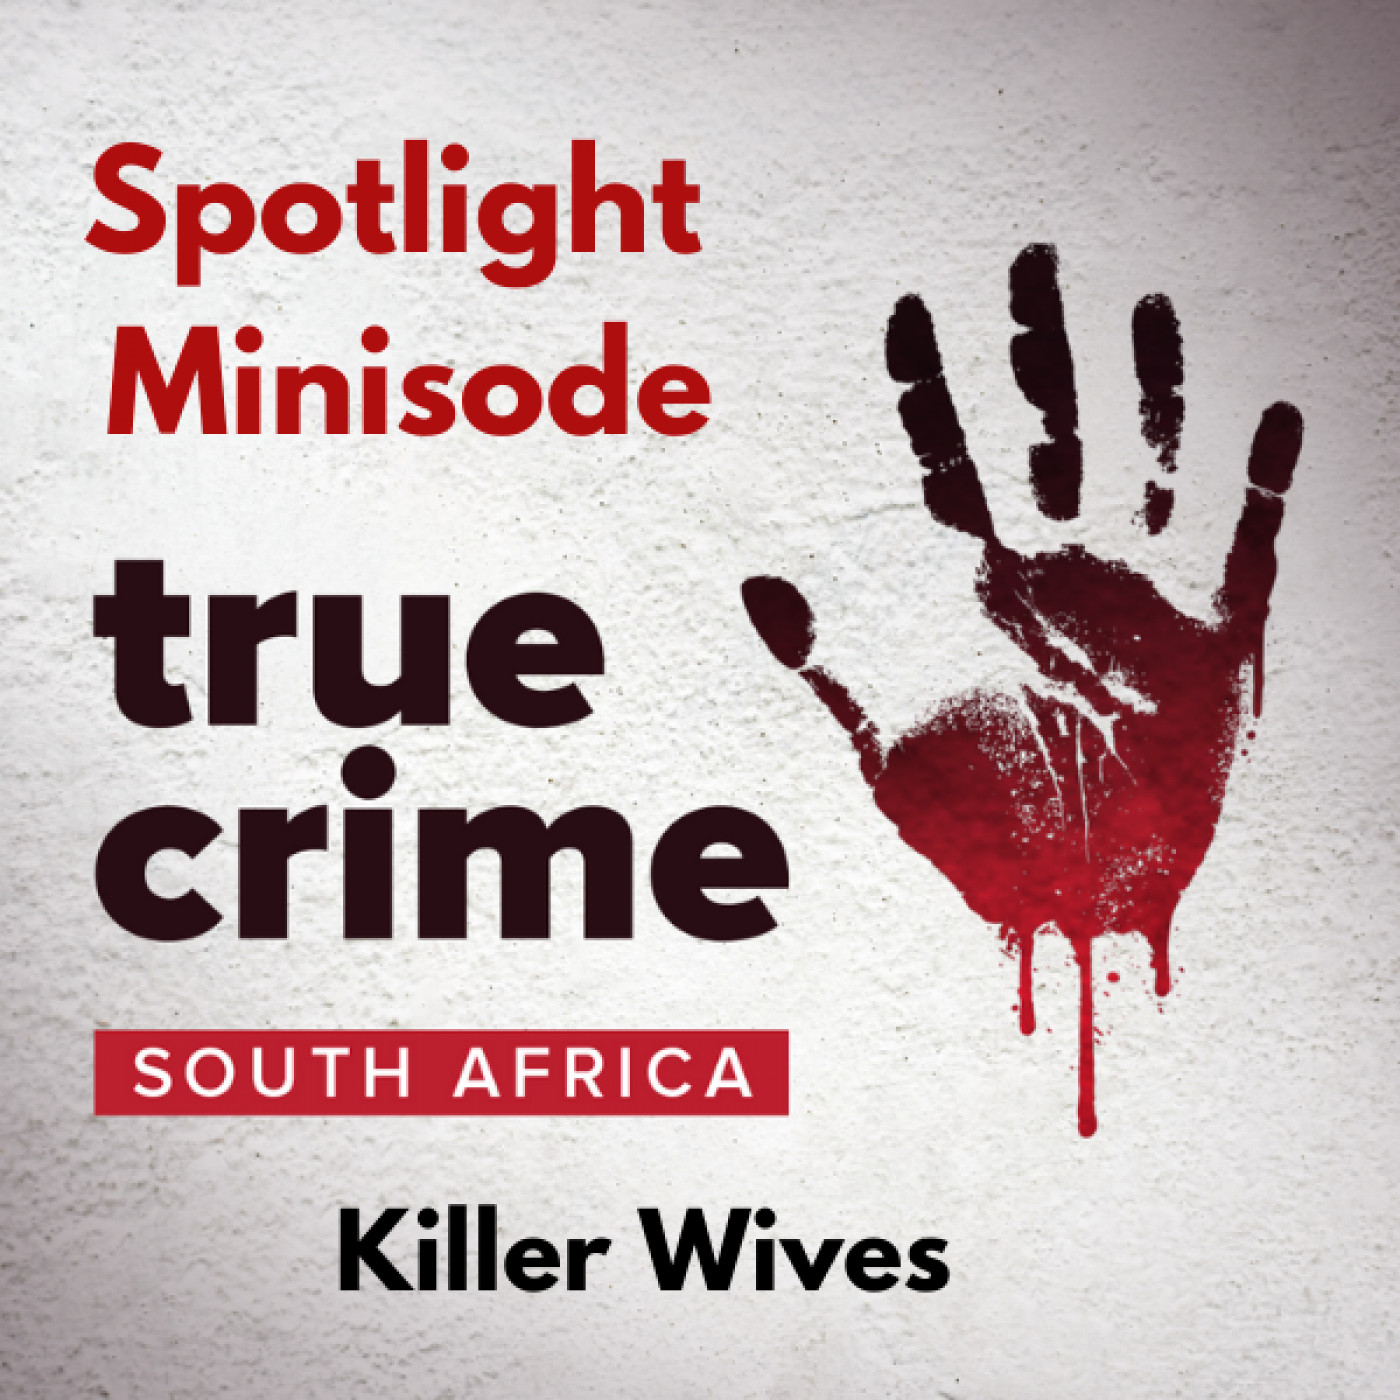 Spotlight Minisode: Killer Wives